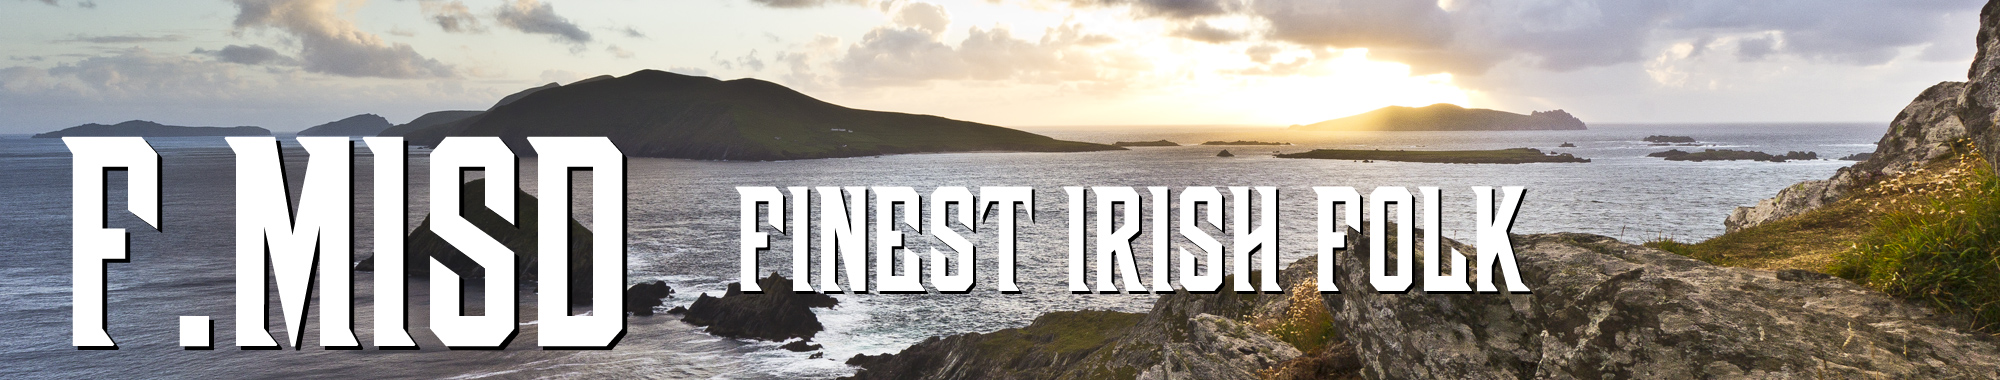 Fmisd – Finest Irish Folk